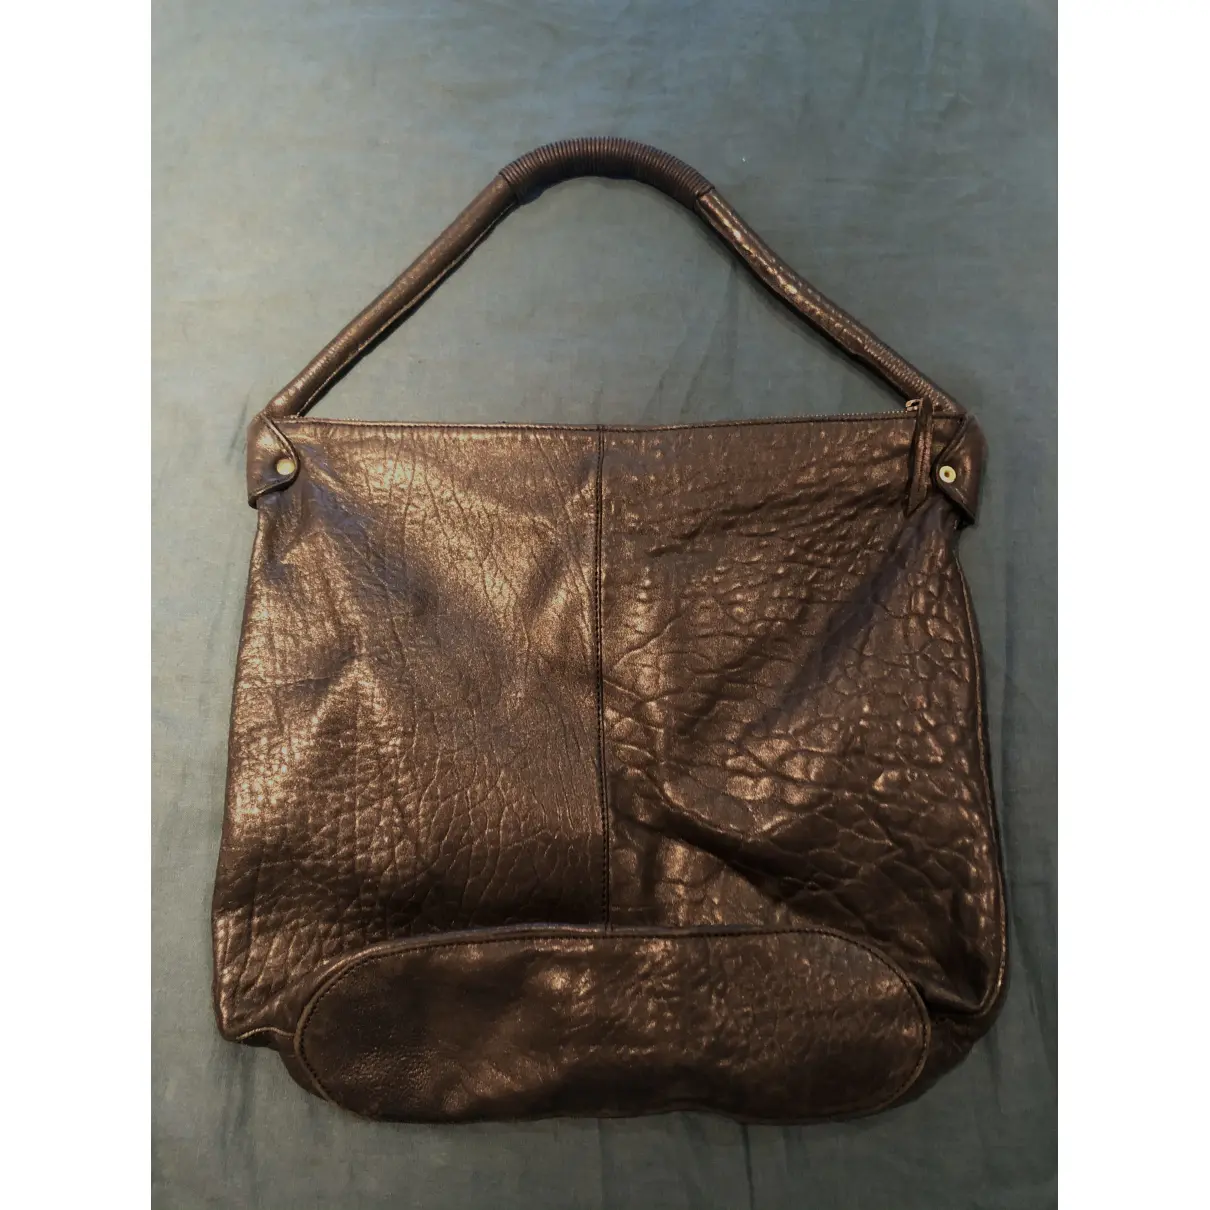 Buy Swildens Leather handbag online